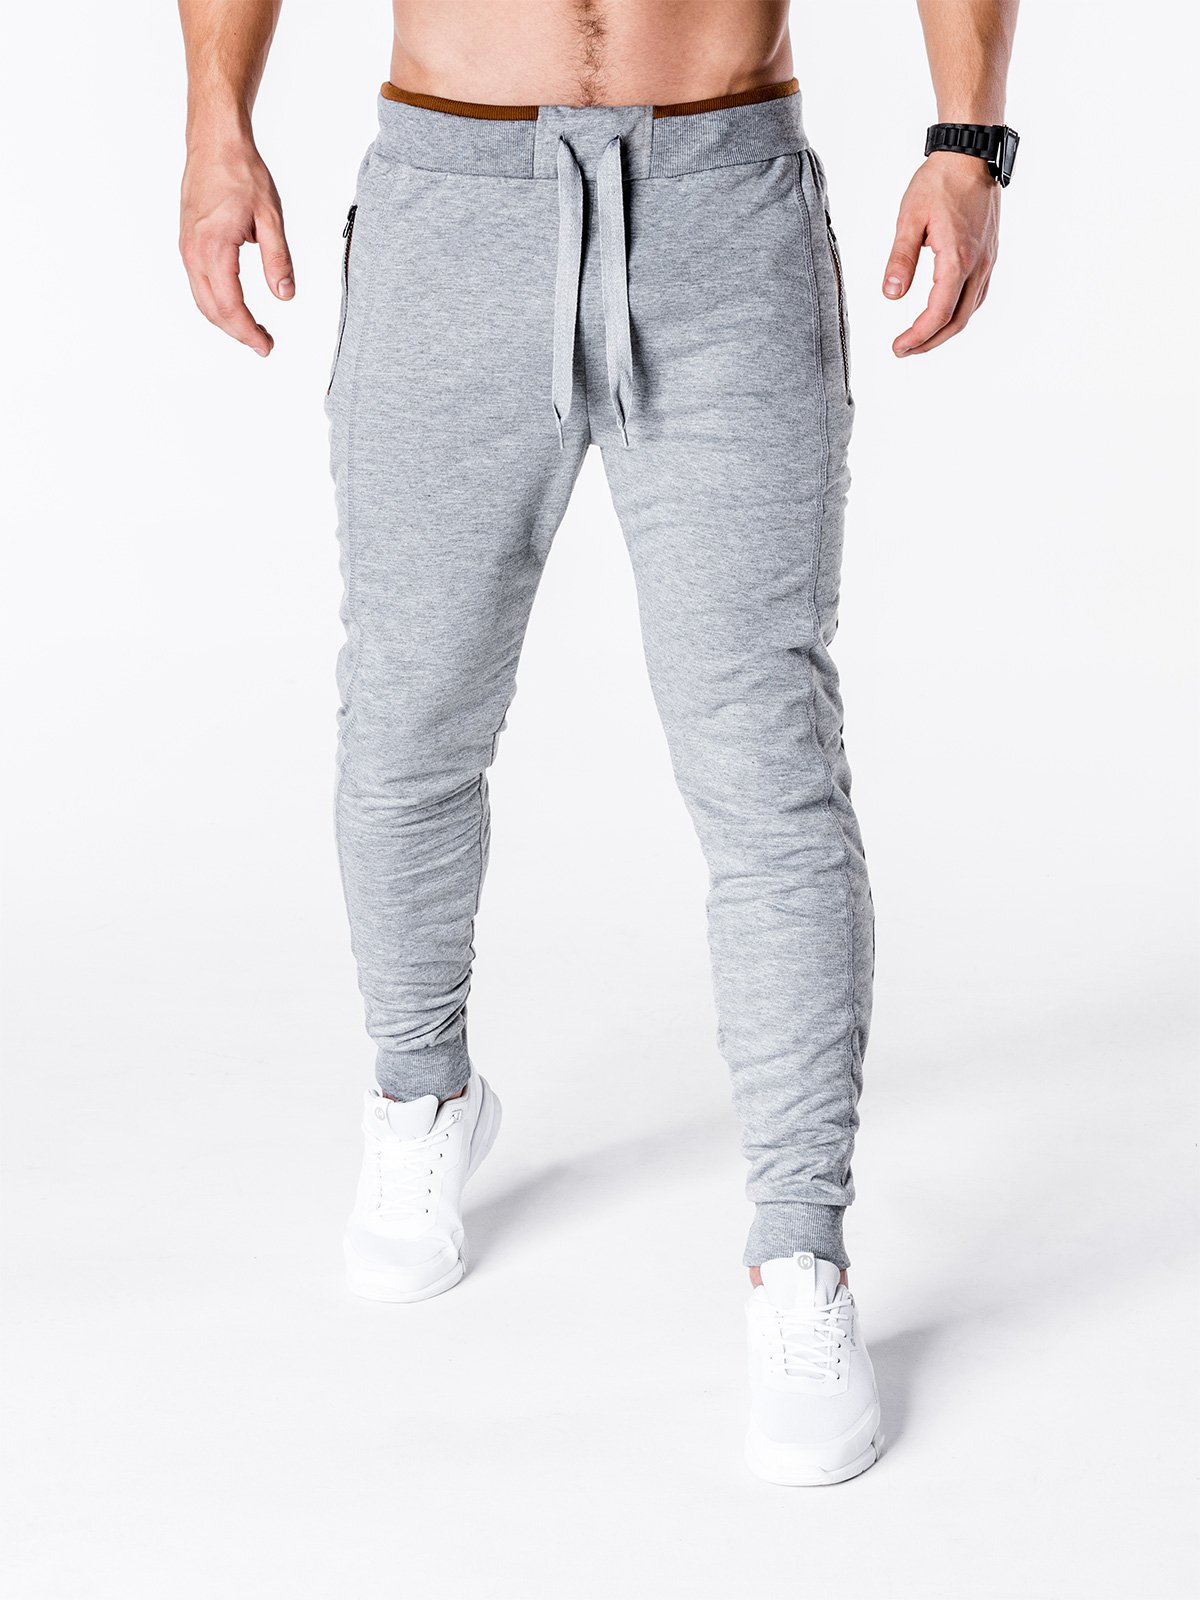 Men's sweatpants P617 - grey | Ombre.com - Men's clothing online